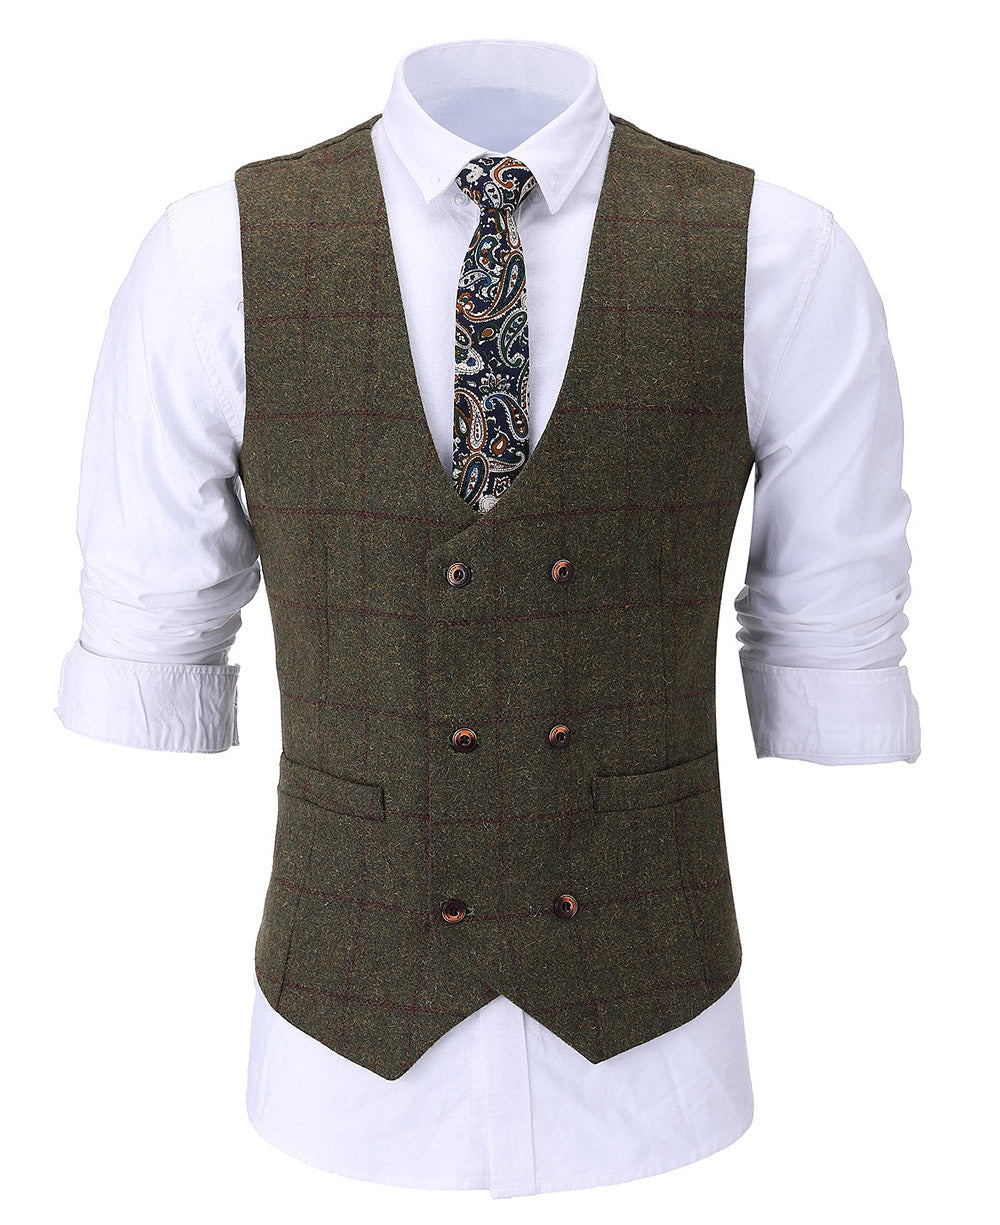 aesido Formal Men's Suit Vest Plaid Tweed U Neck Waistcoat